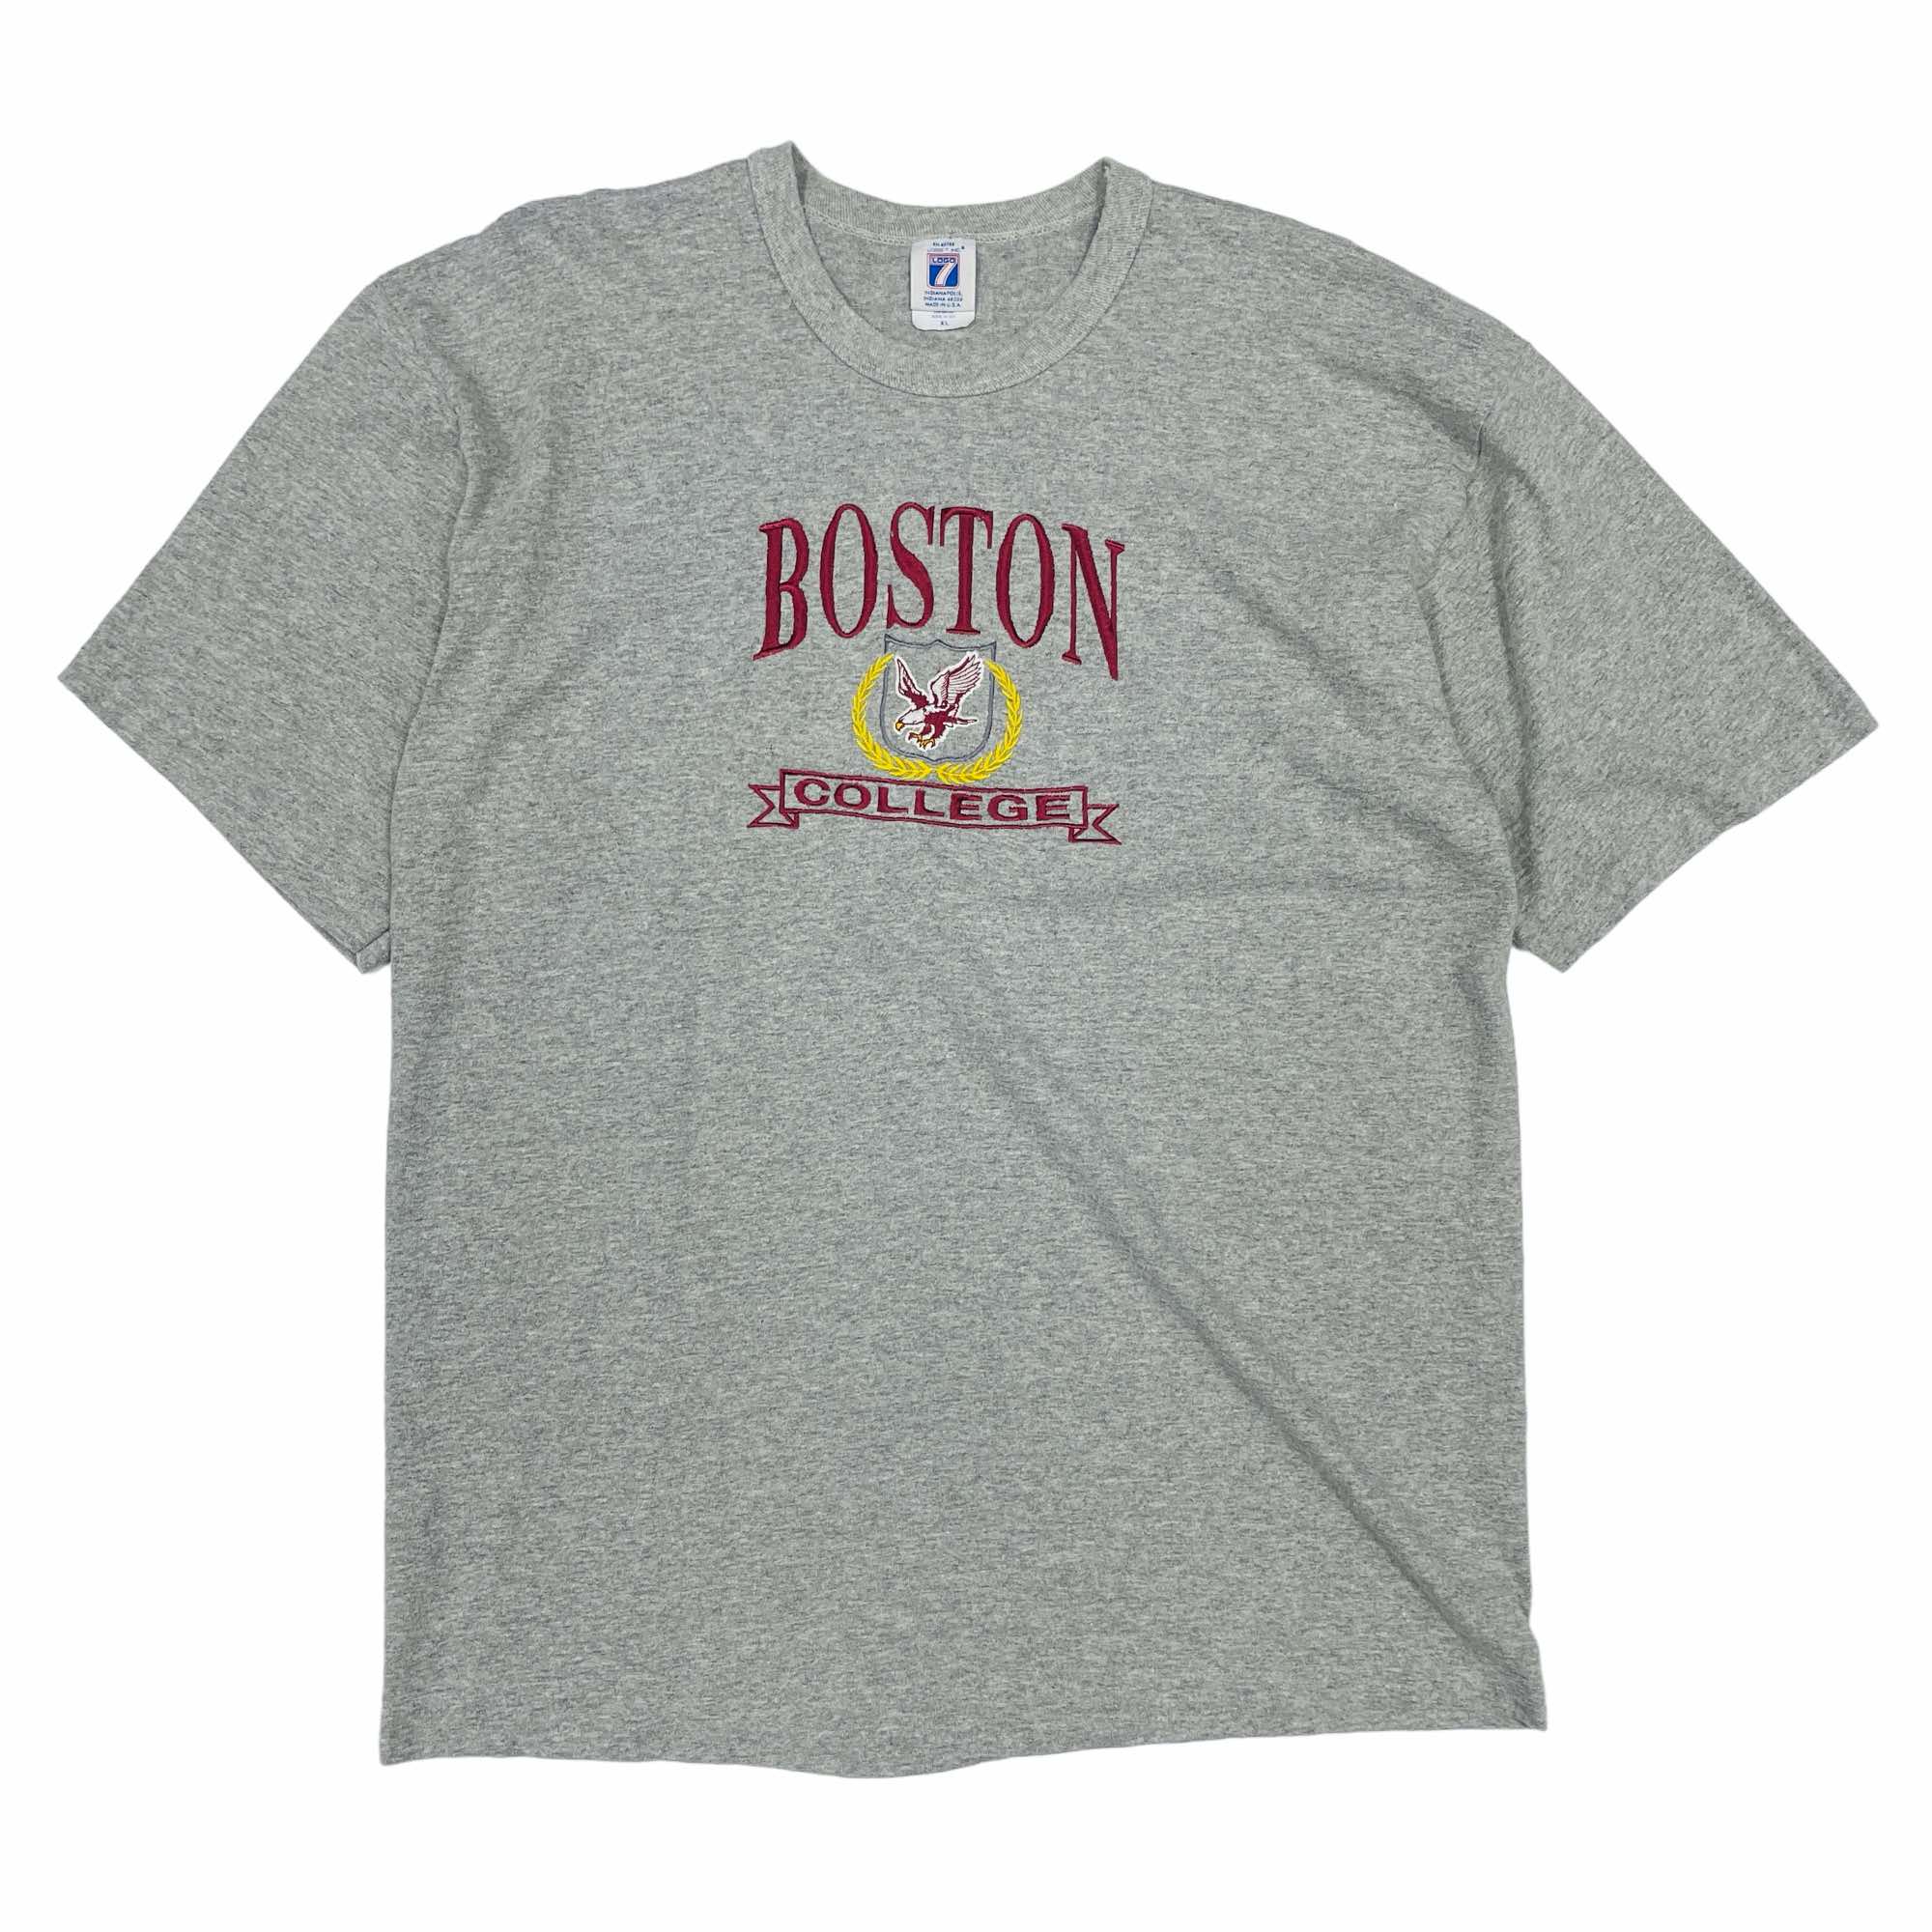 Boston College T-Shirt - XL